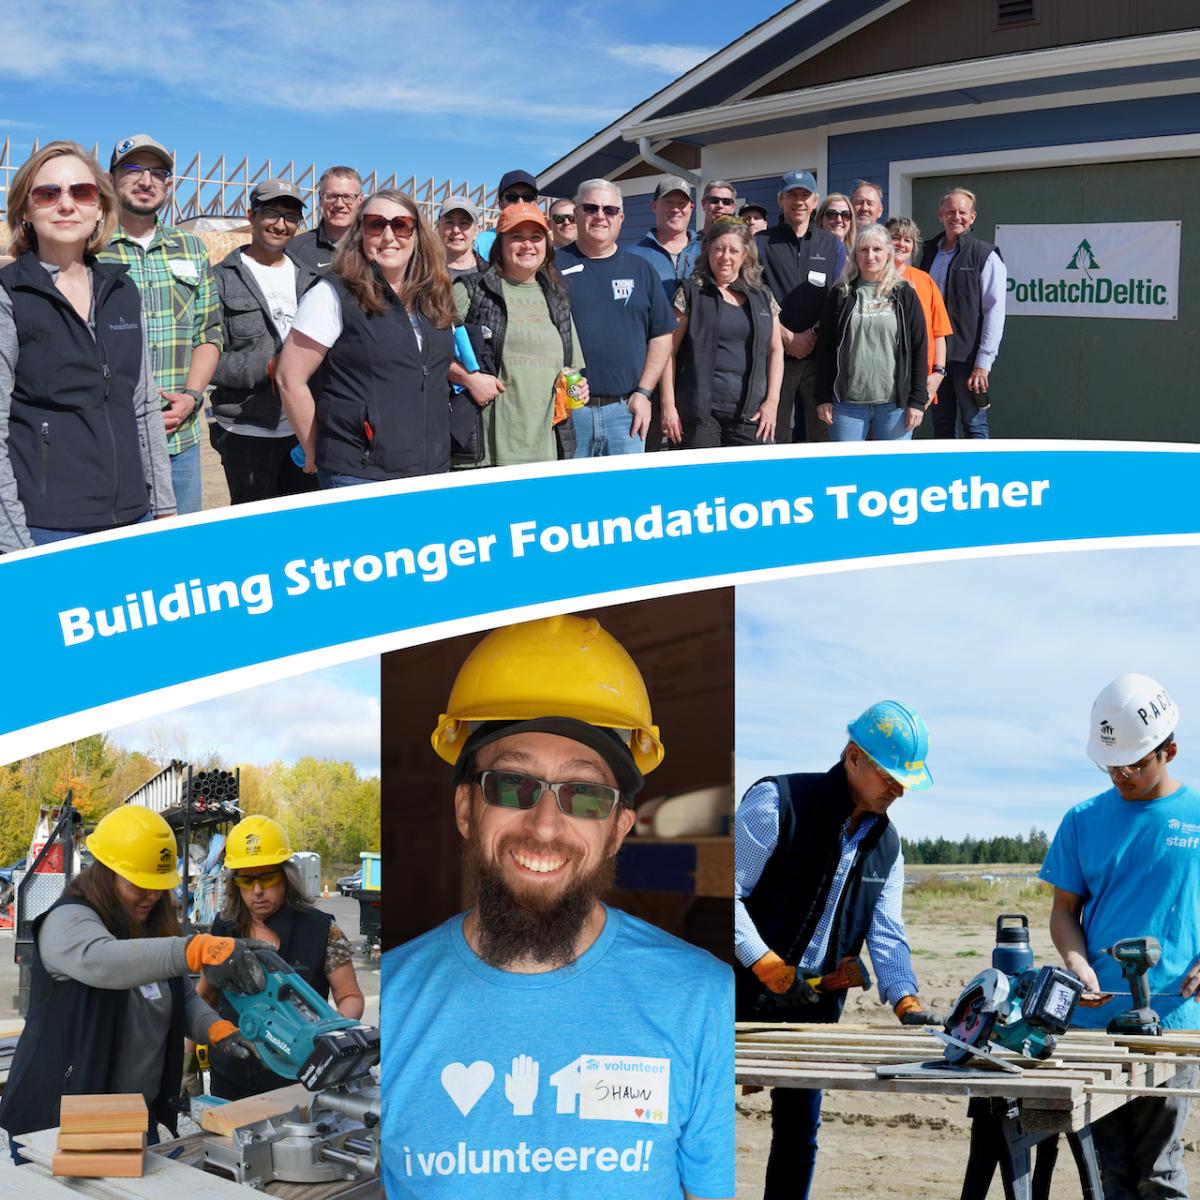 PotlatchDeltic "Building Stronger Foundations Together"